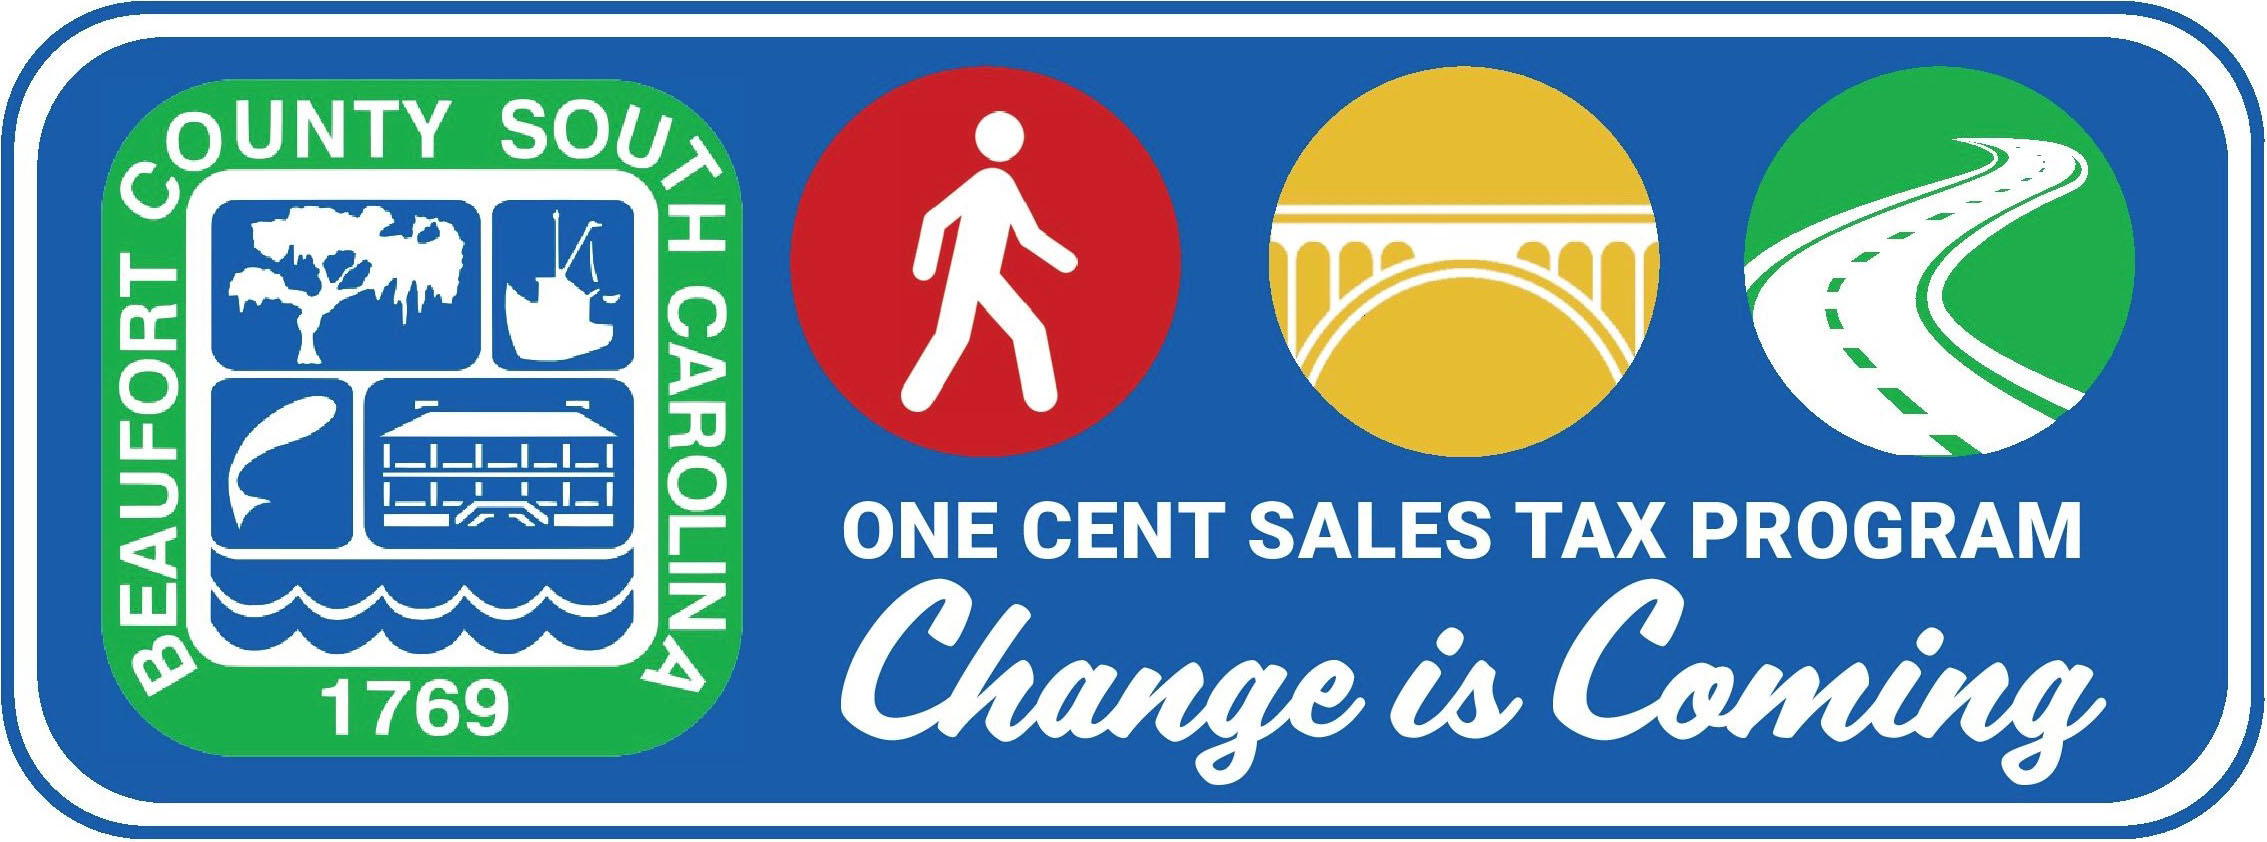 One Cent Sales Tax Program Logo